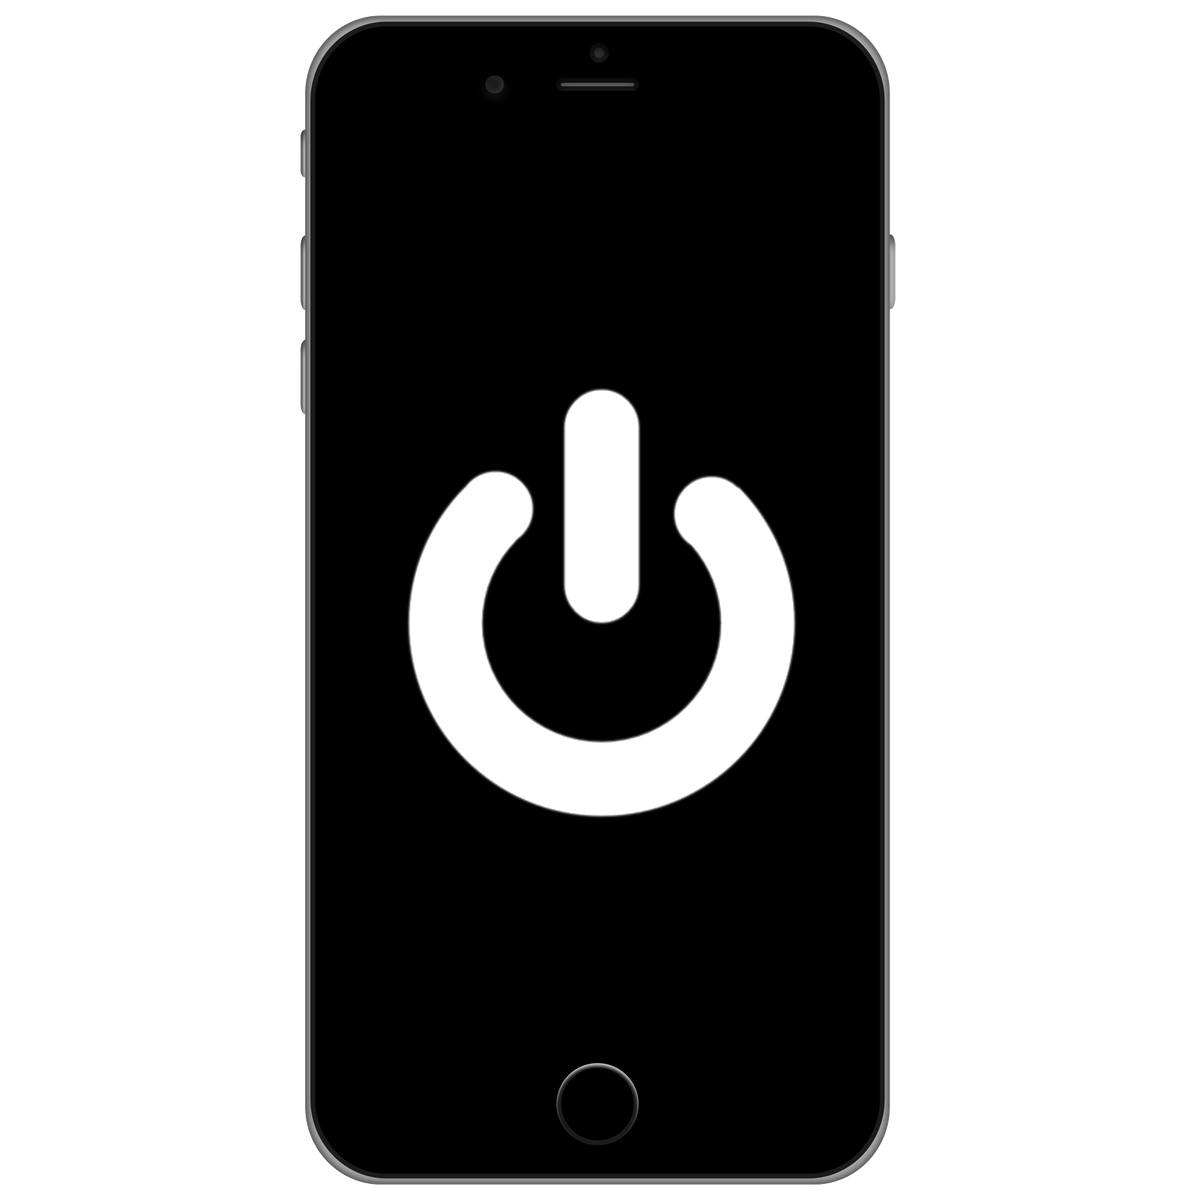 iPhone 11 Pro Power Button Repair - TechPros